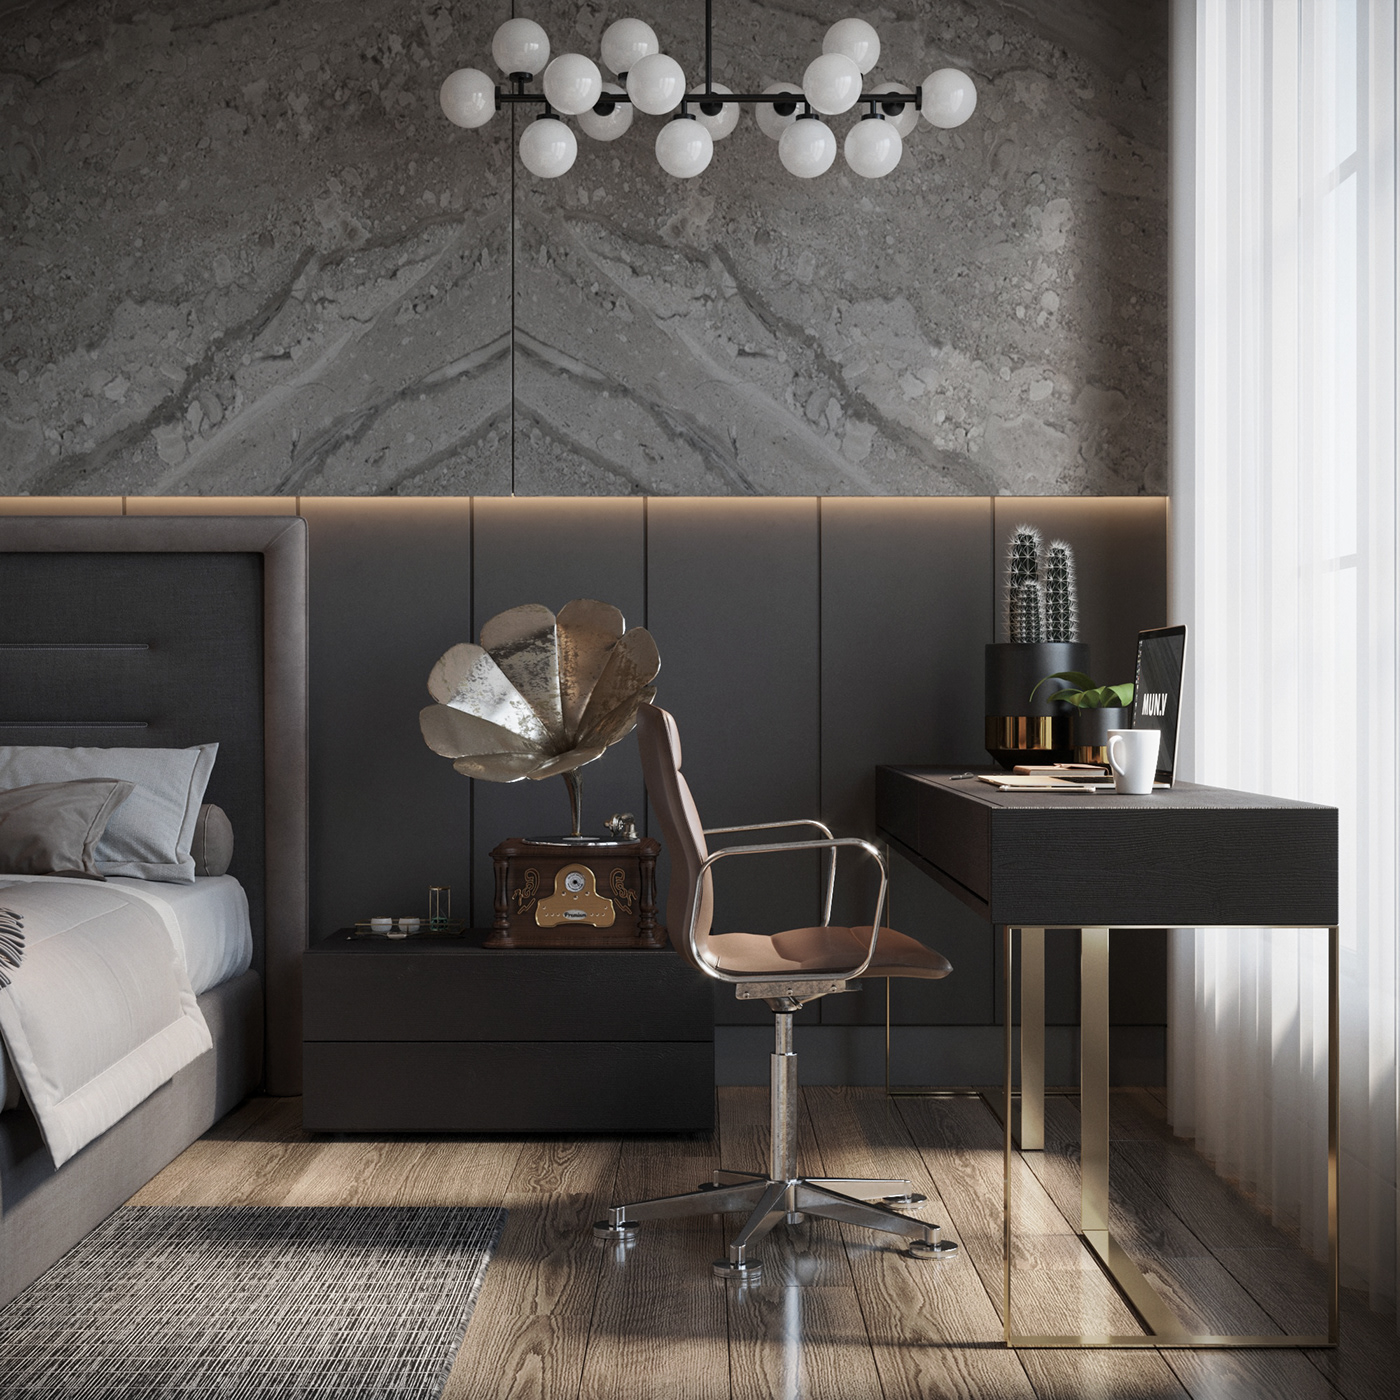 3dvisual art bedroom decor design home Interior luxury moden rendering